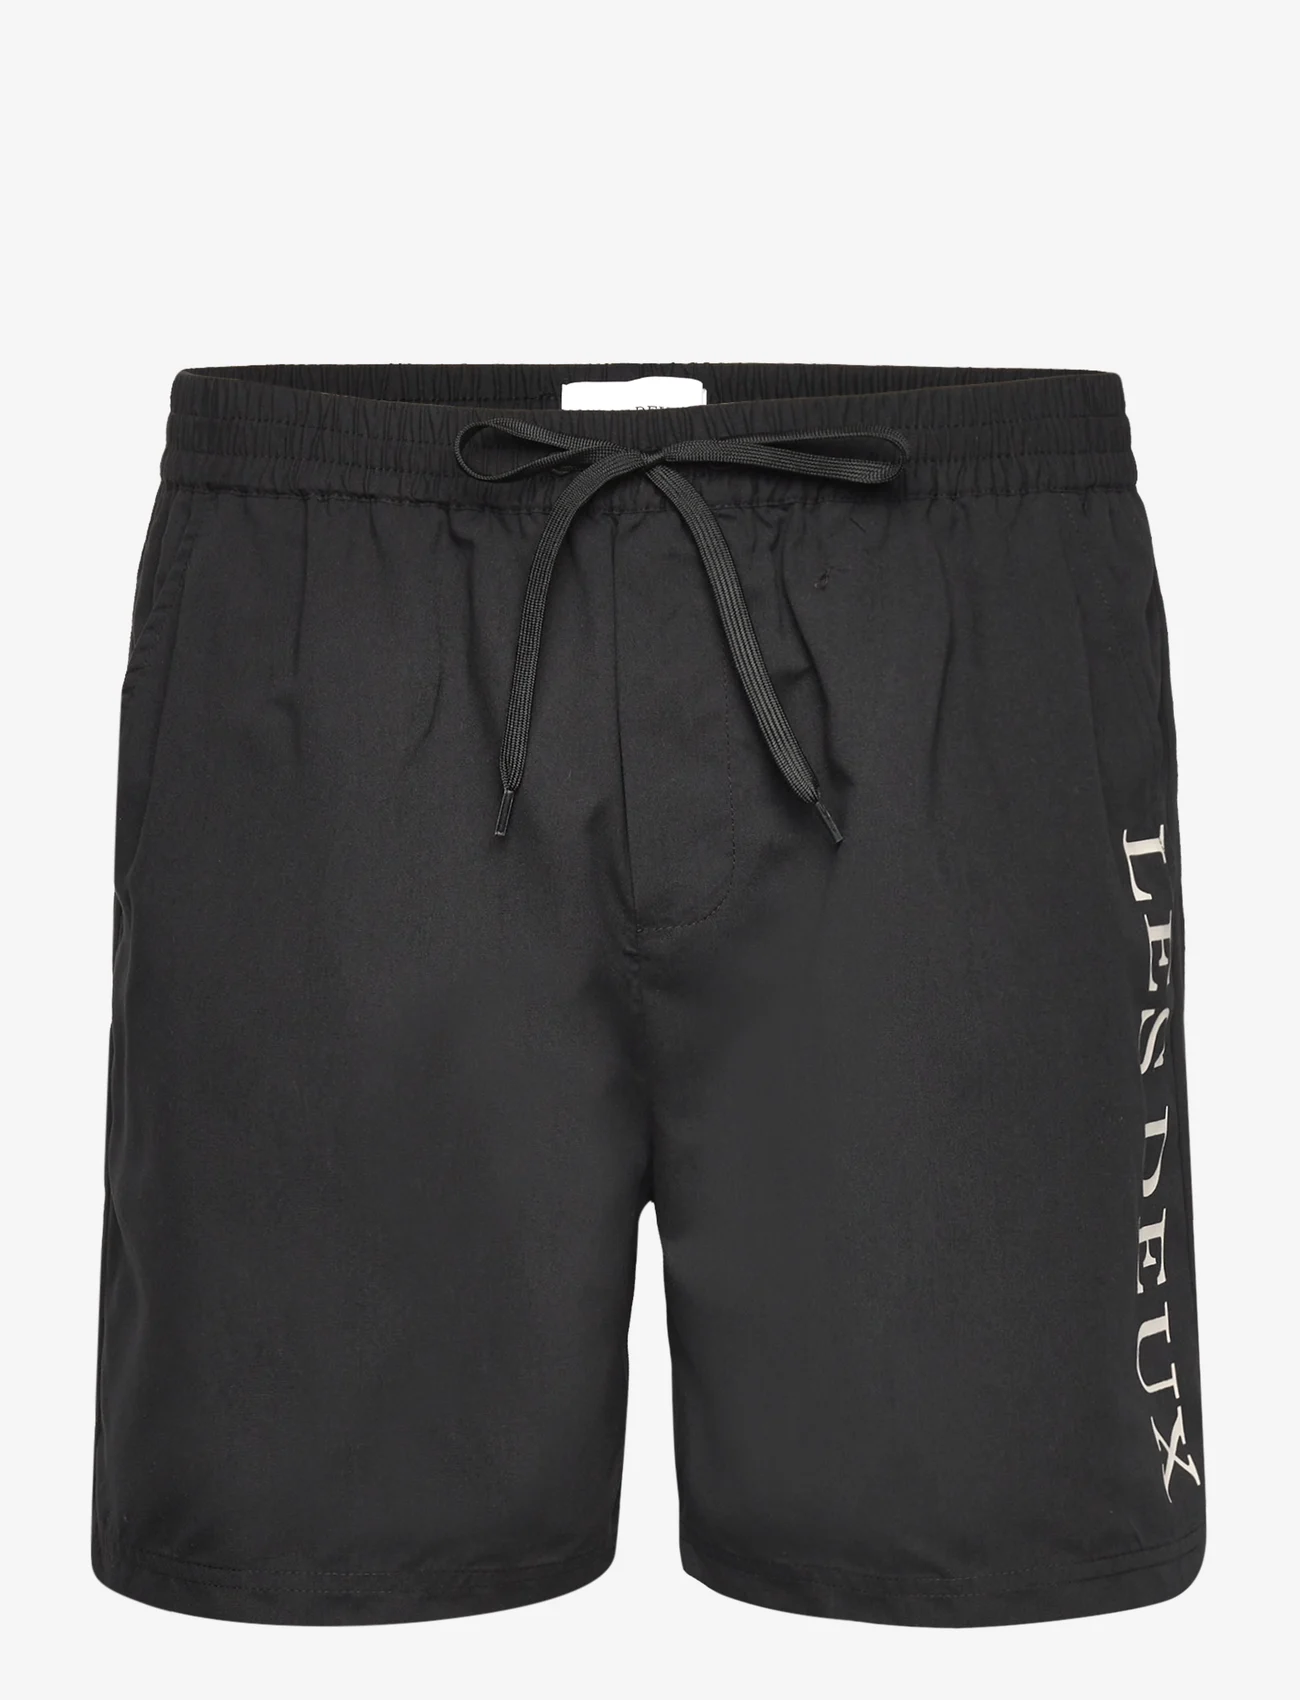 Les Deux - Les Deux Logo Swim Shorts - szorty kąpielowe - black/ivory - 0